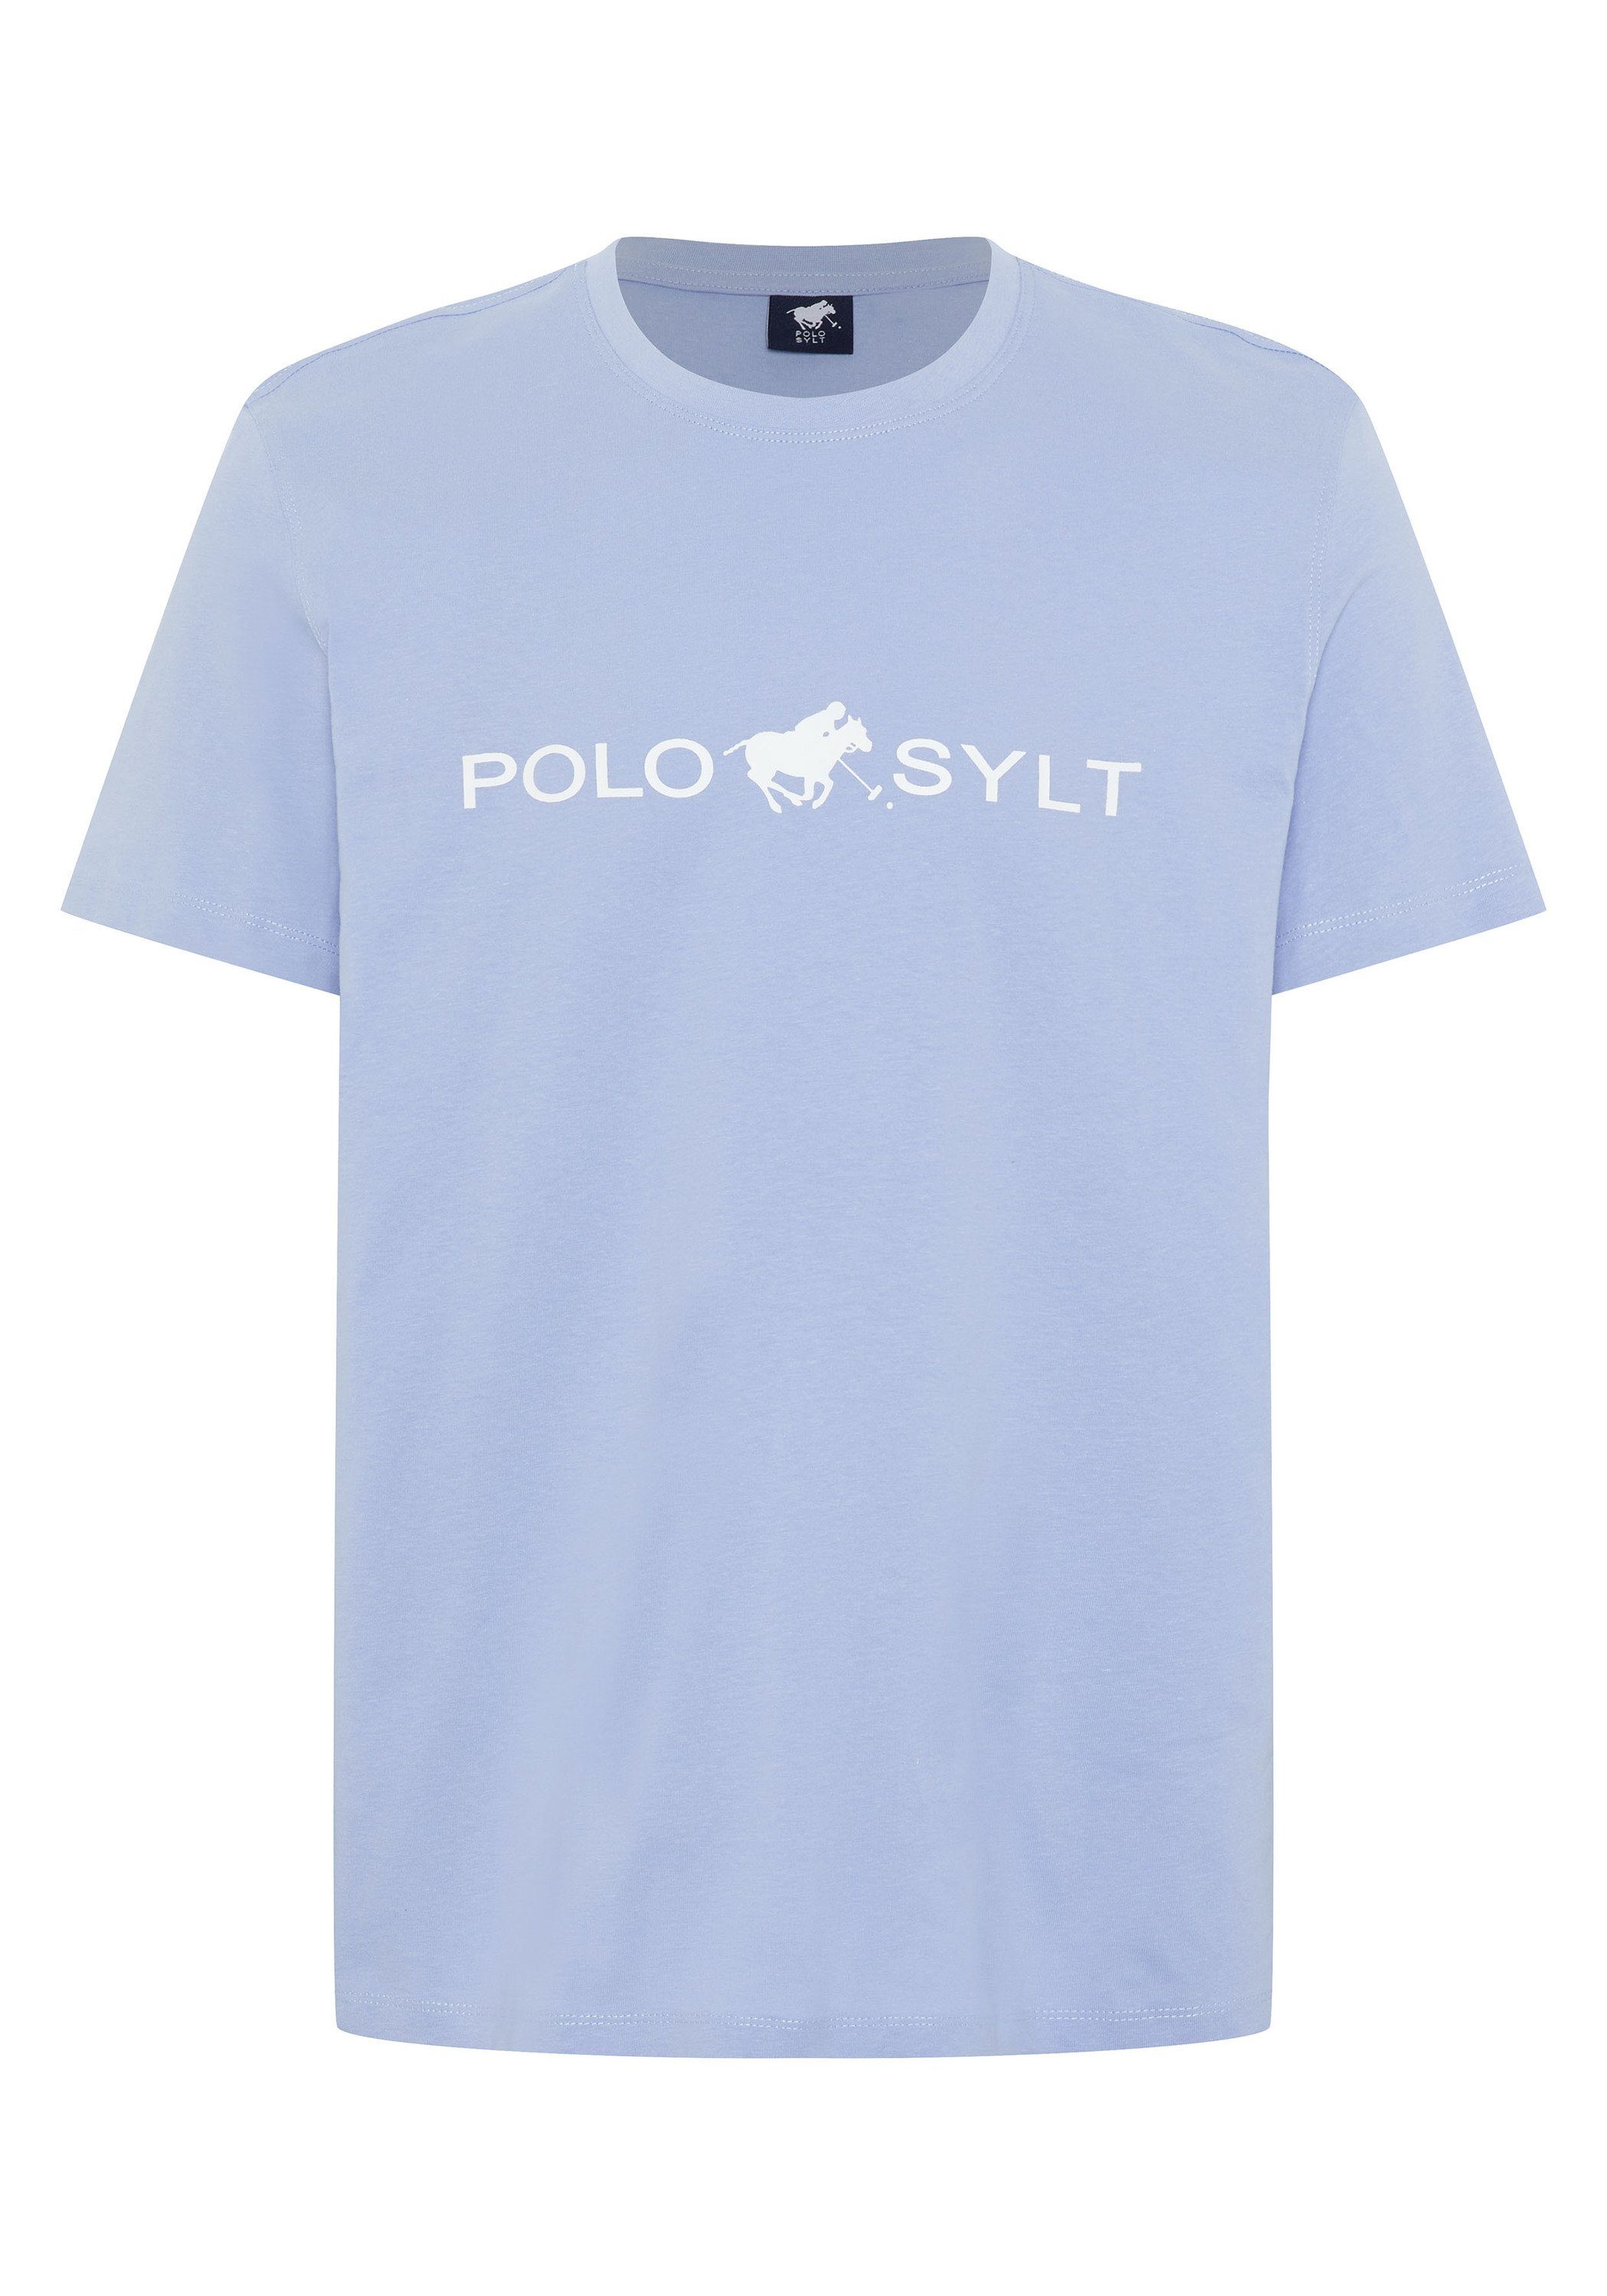 Polo Sylt Print-Shirt mit auffälligem Logo-Print 16-3922 Brunnera Blue